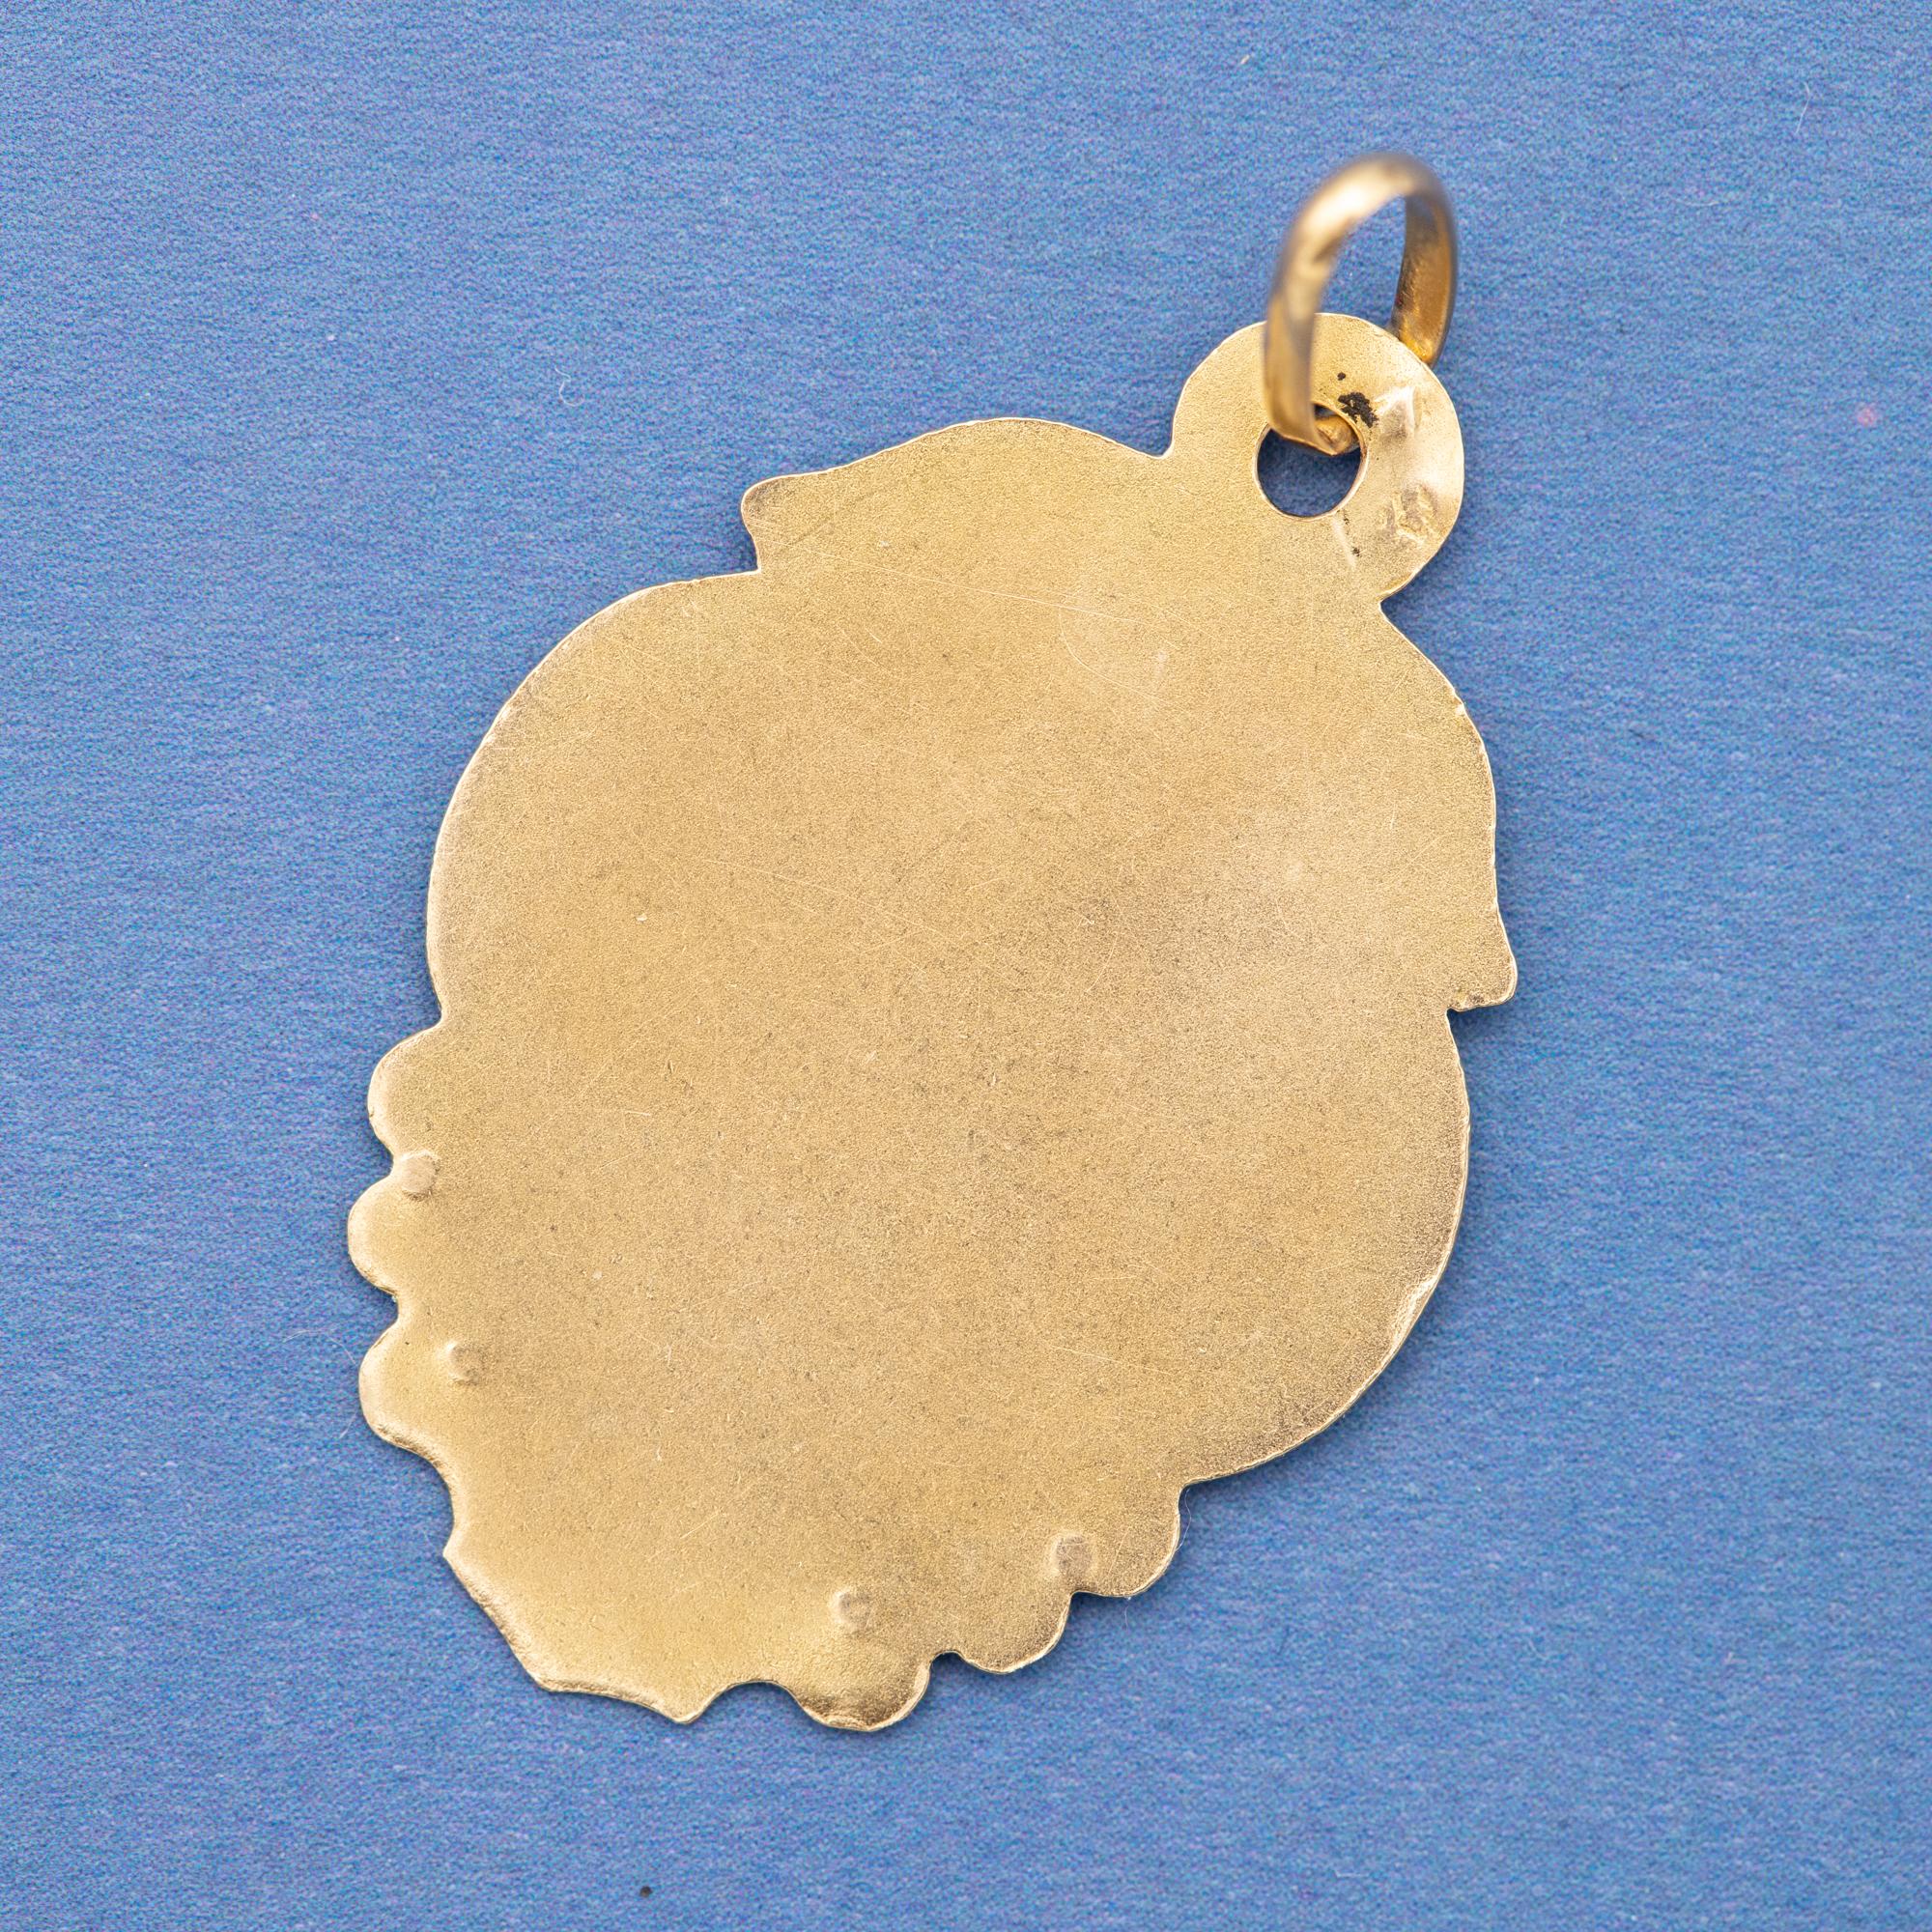 18k gold virgin mary pendant